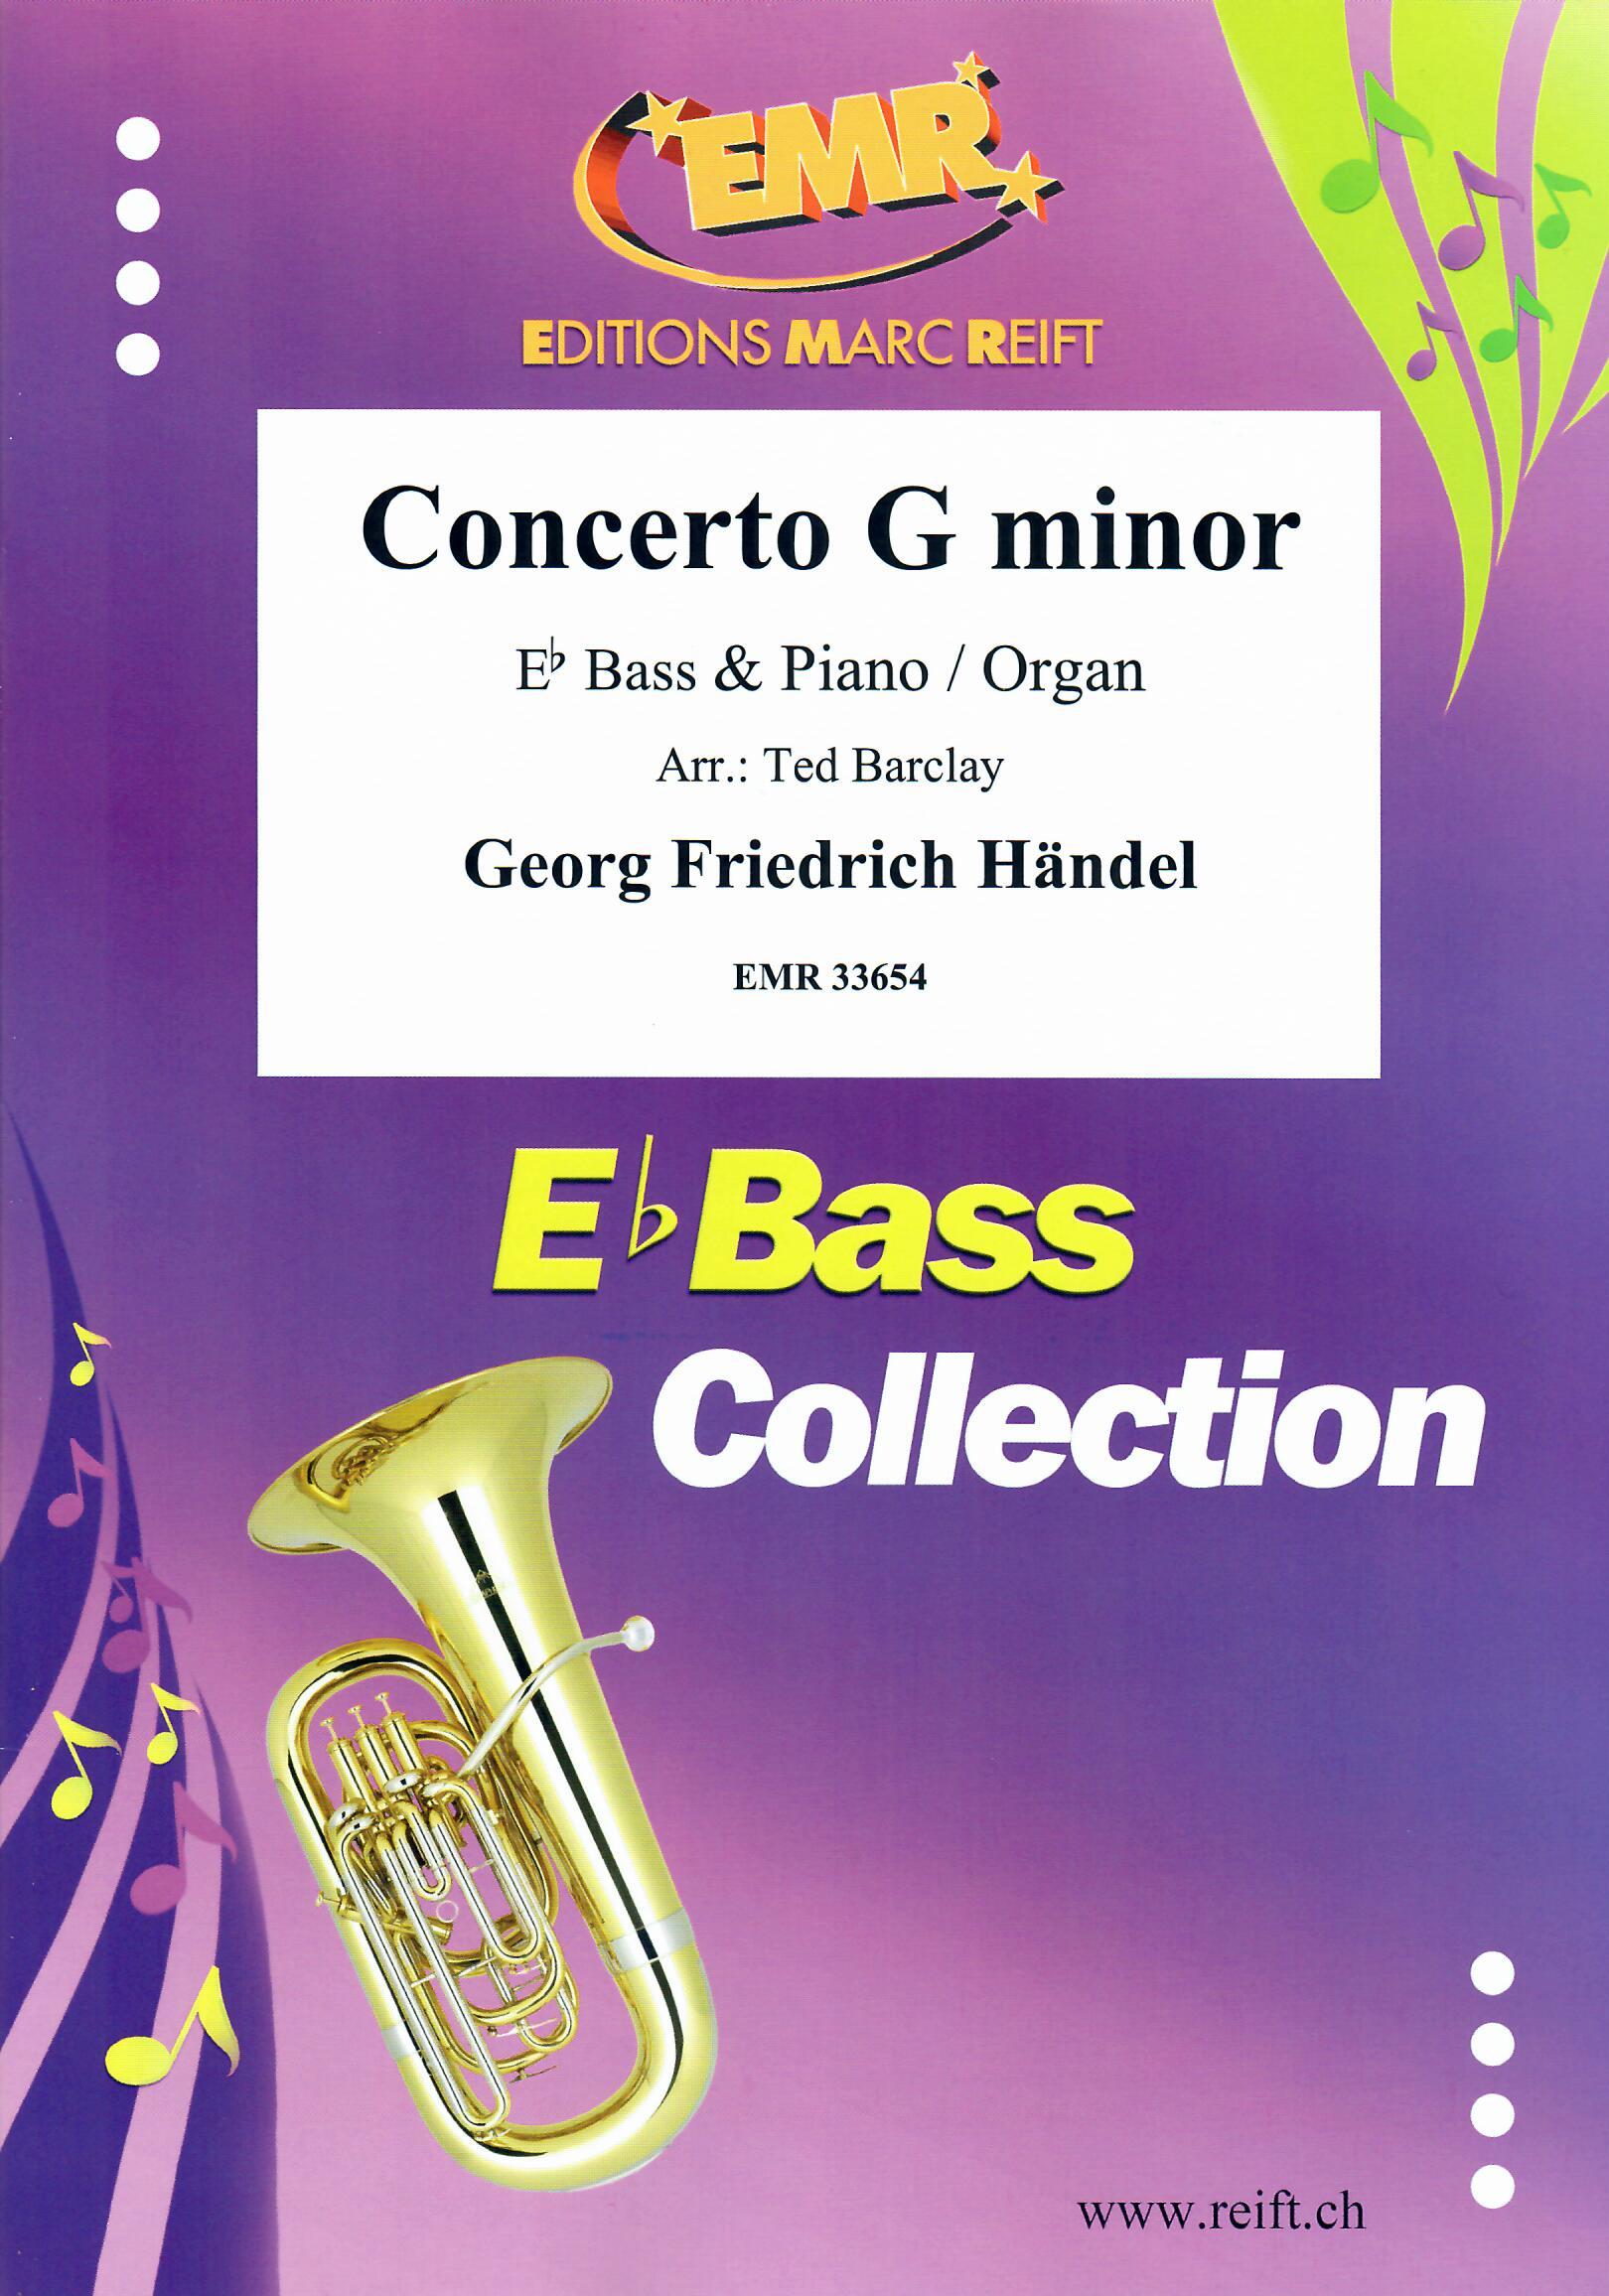 CONCERTO G MINOR, SOLOS - E♭. Bass